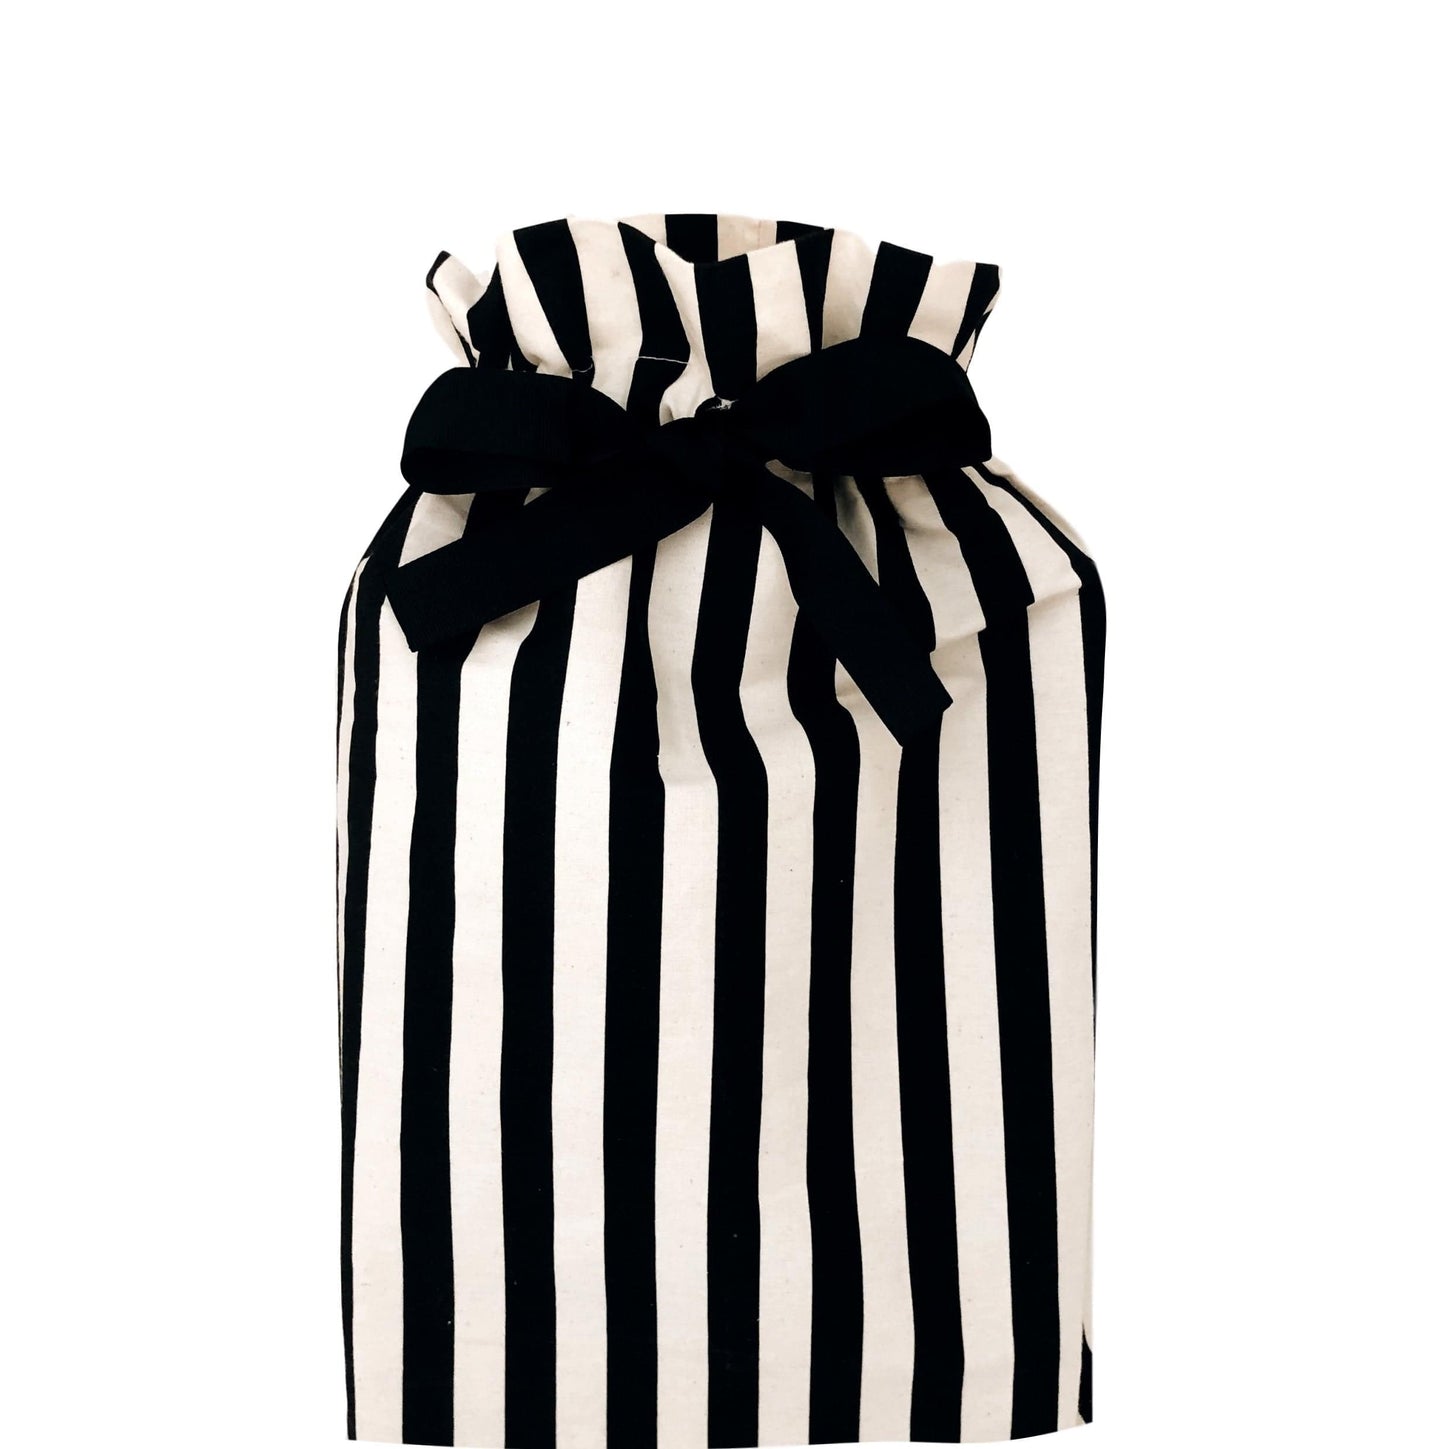 Medium gift bag black and white vertically striped.